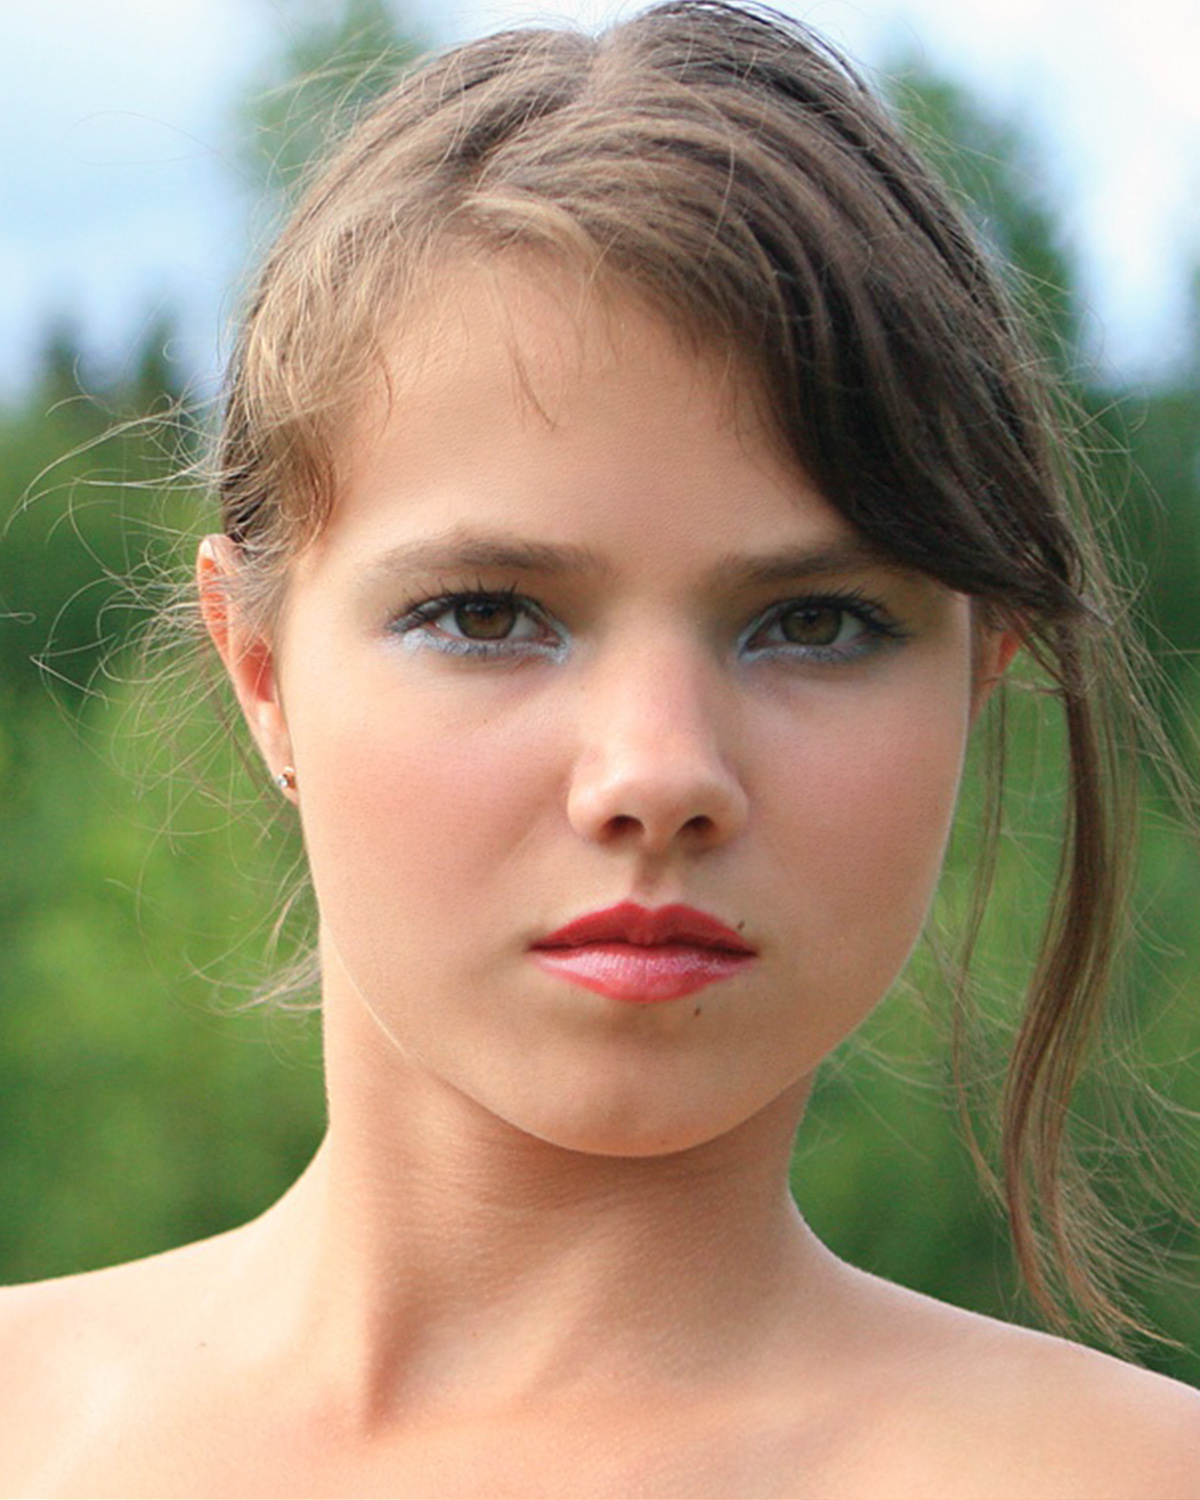 Sandra orlow teen model sets star wars